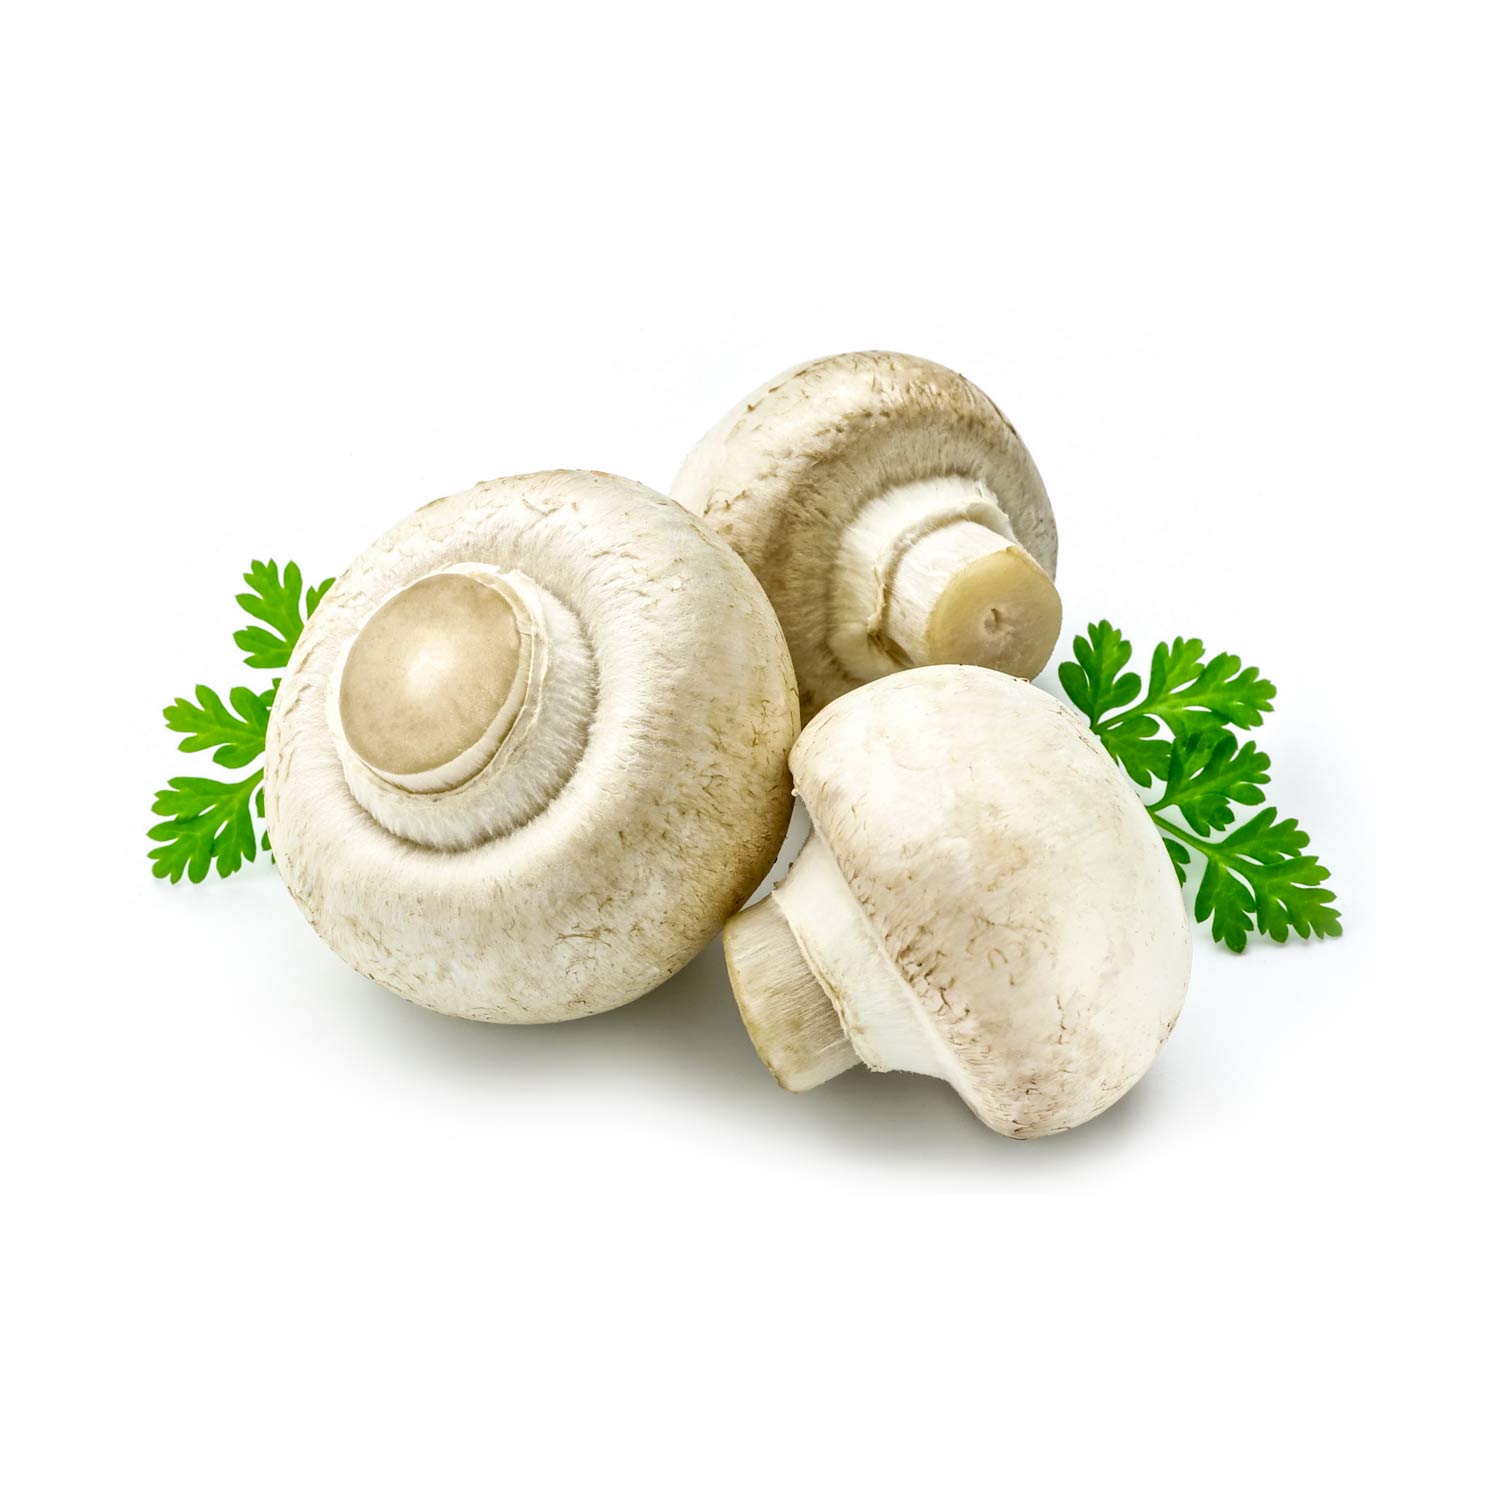 Mushrooms - Vegetables Category